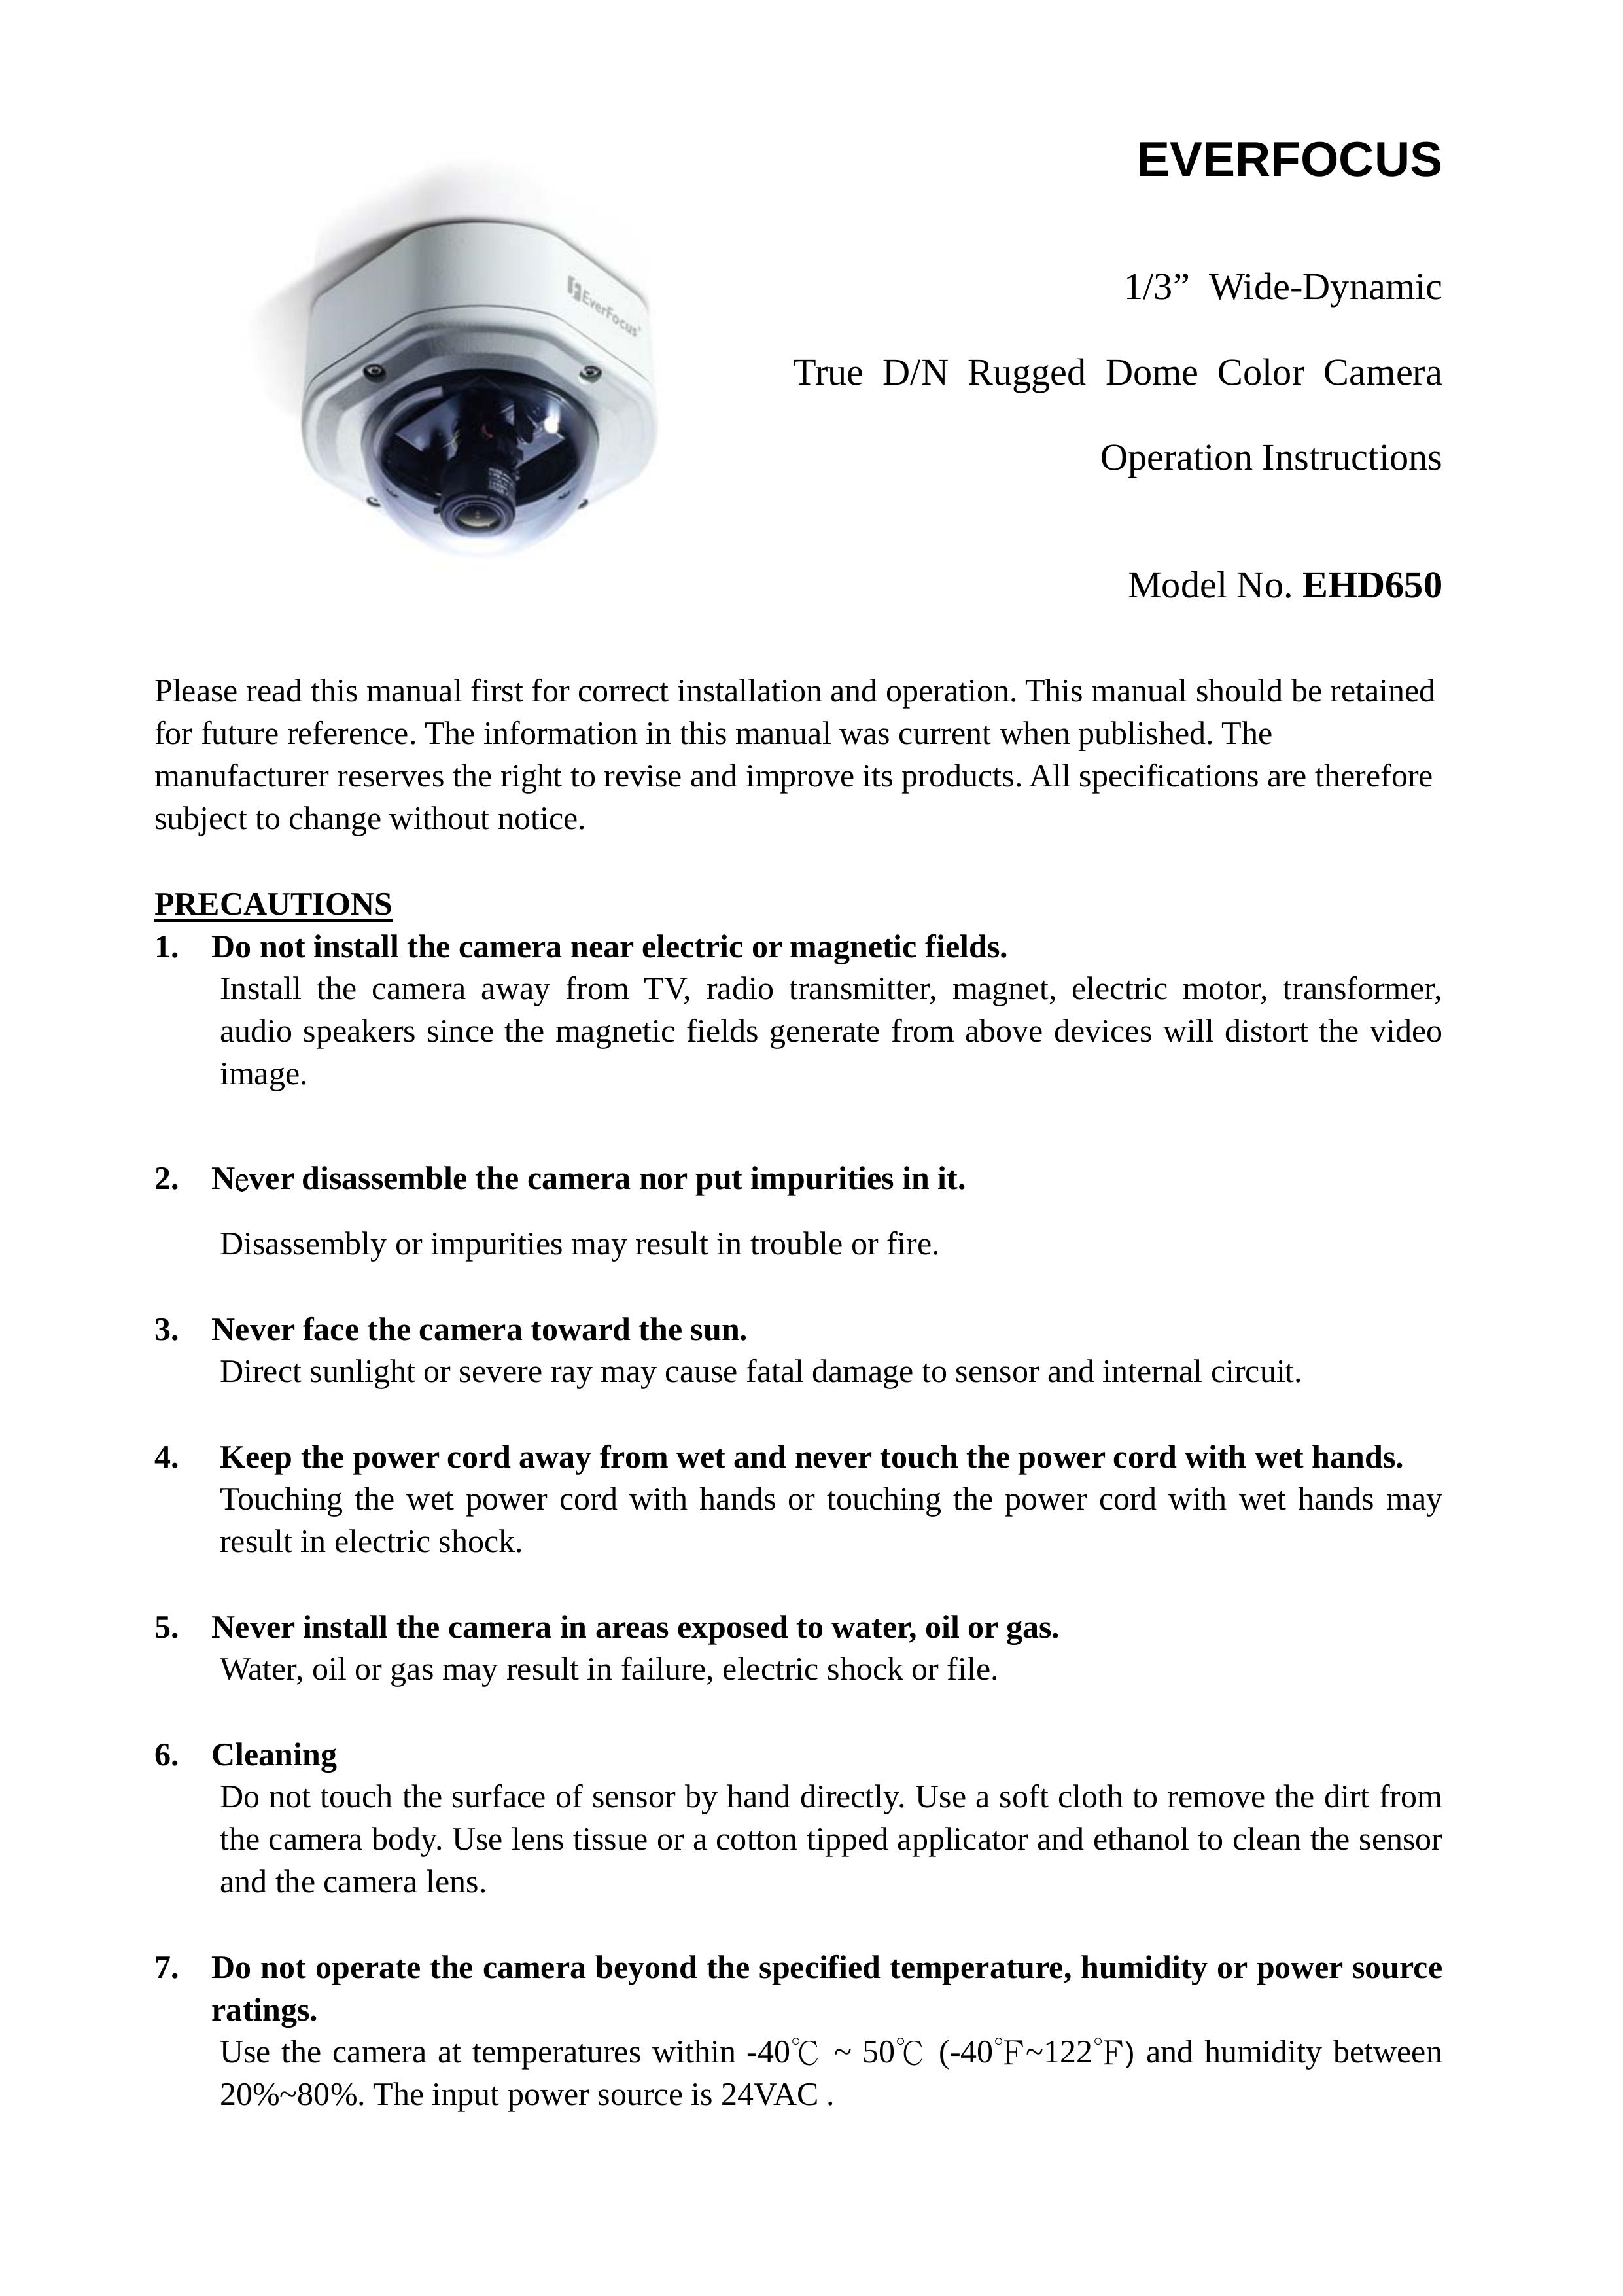 EverFocus EHD650 Security Camera User Manual